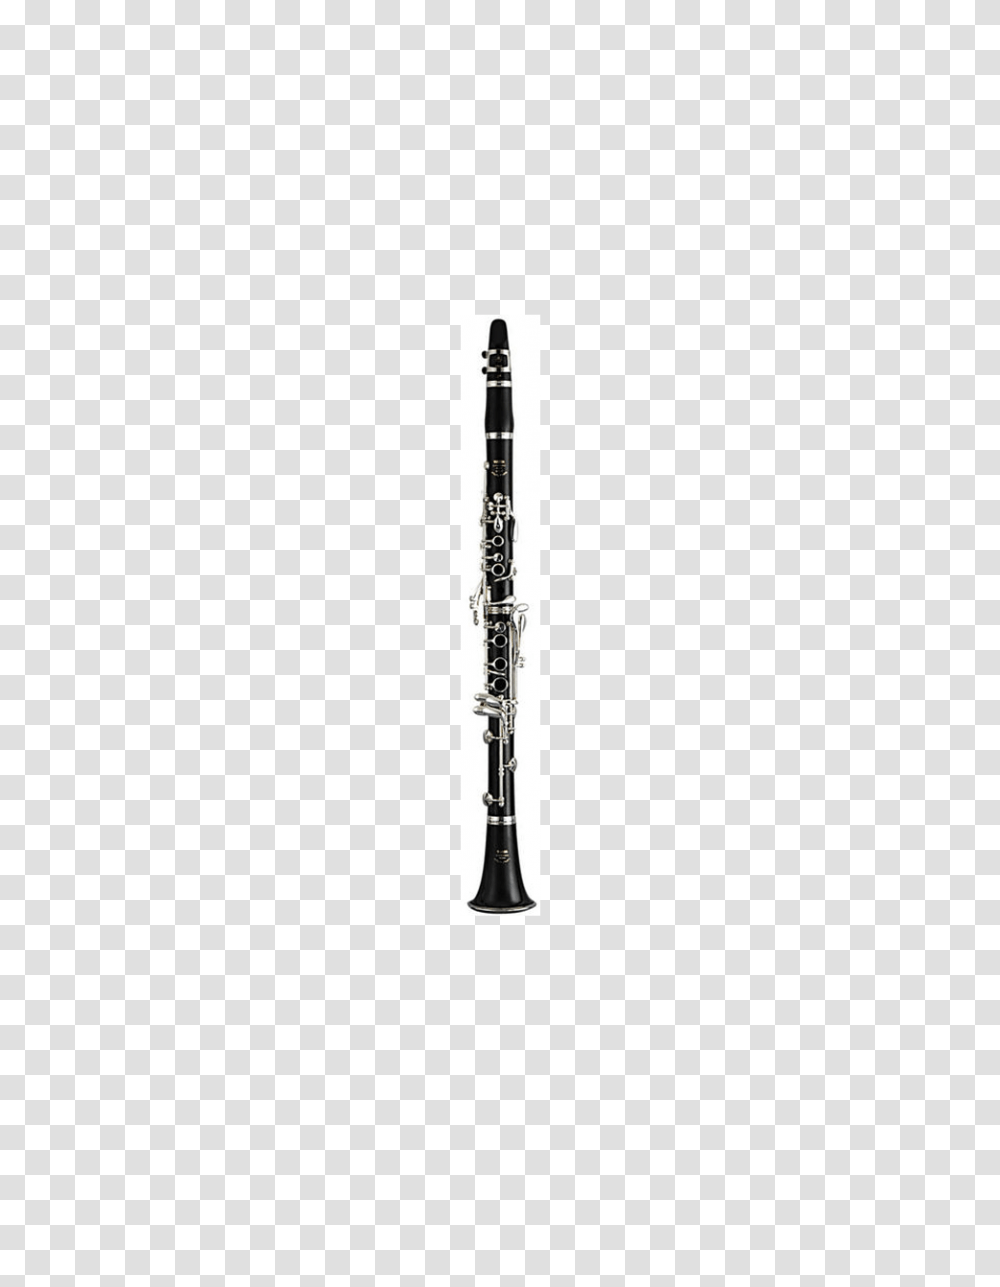 Yamaha, Clarinet, Musical Instrument, Oboe Transparent Png